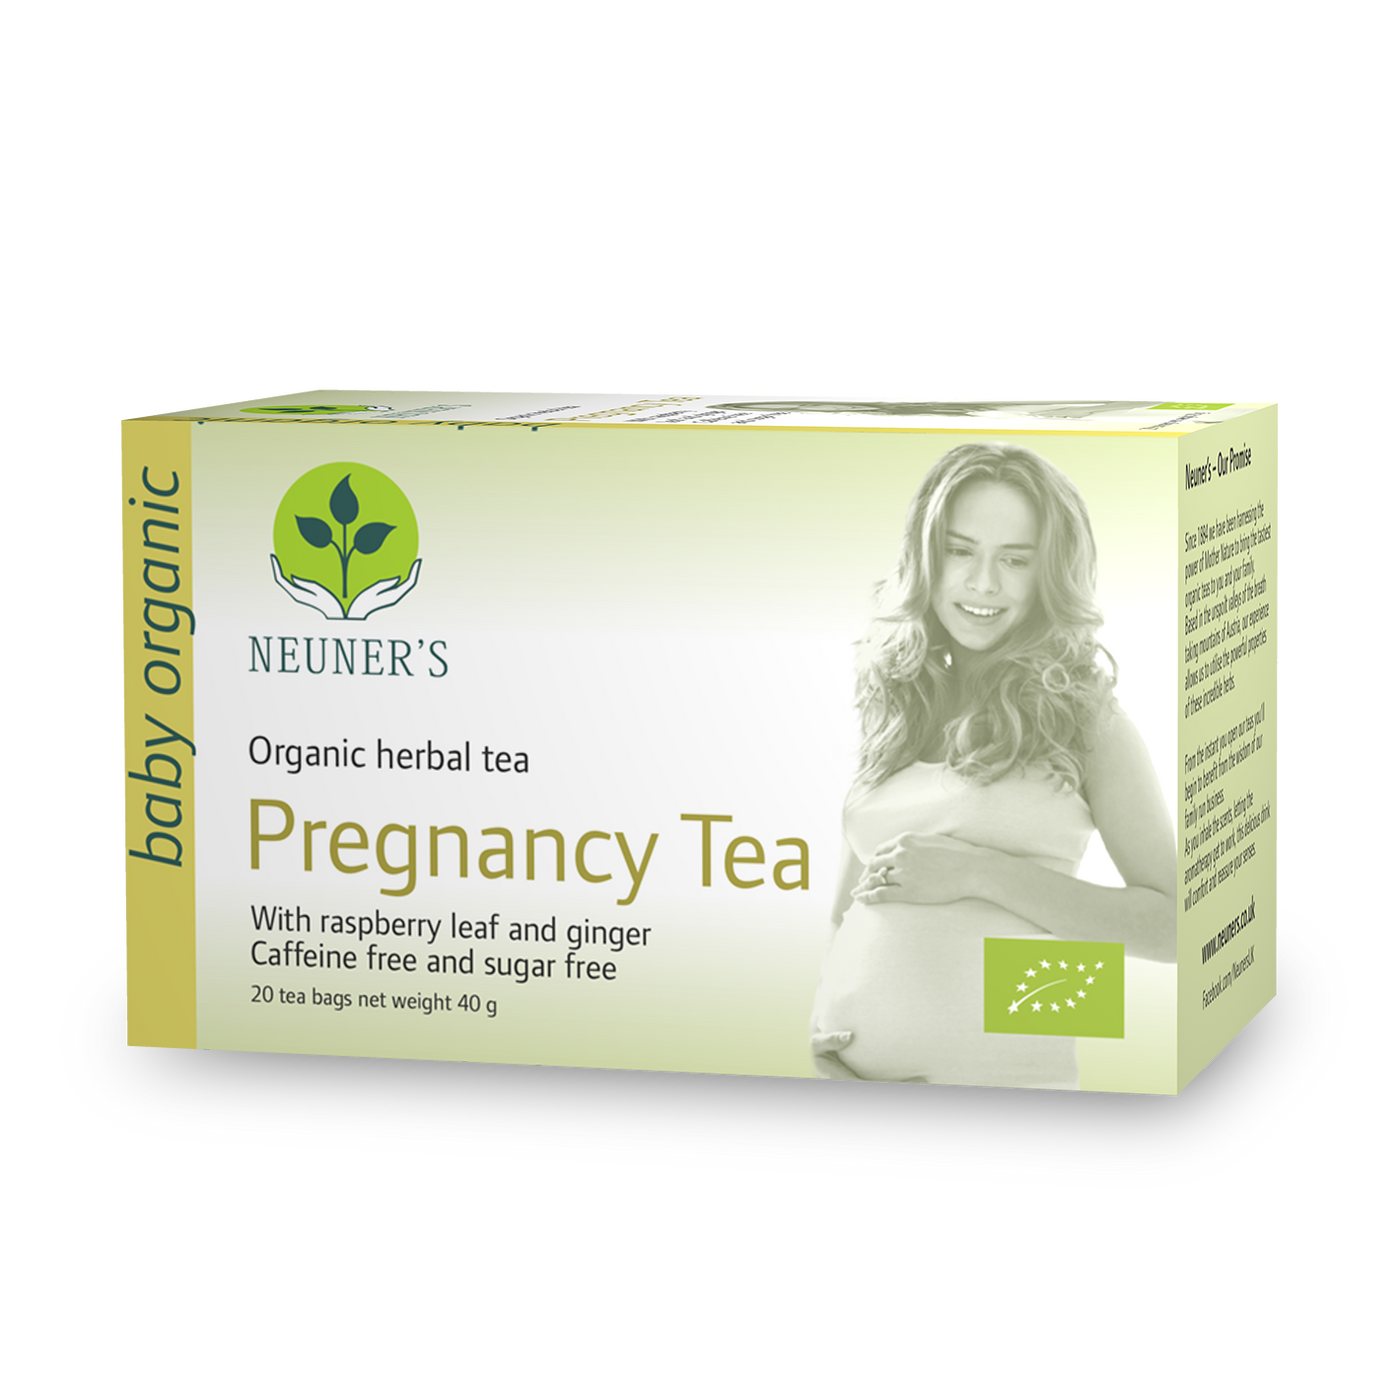 Neuner's Organic Pregnancy Tea